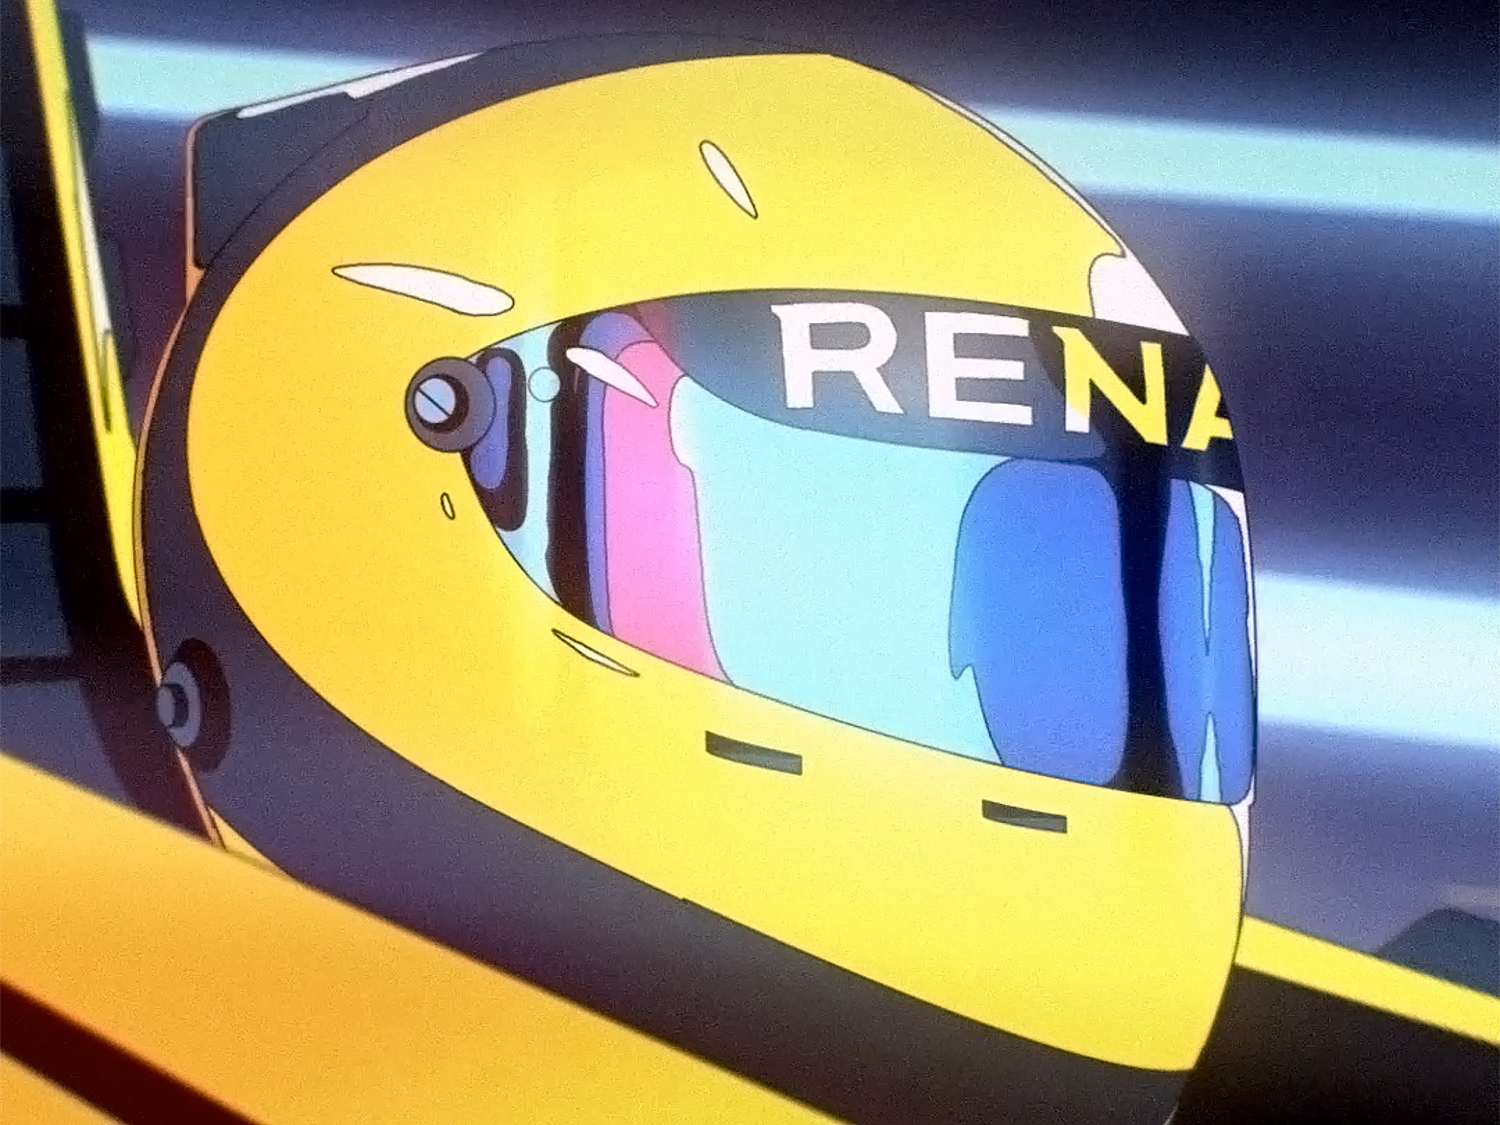 Mixing Formula 1 with manga to introduce Renault's hybrid engine.